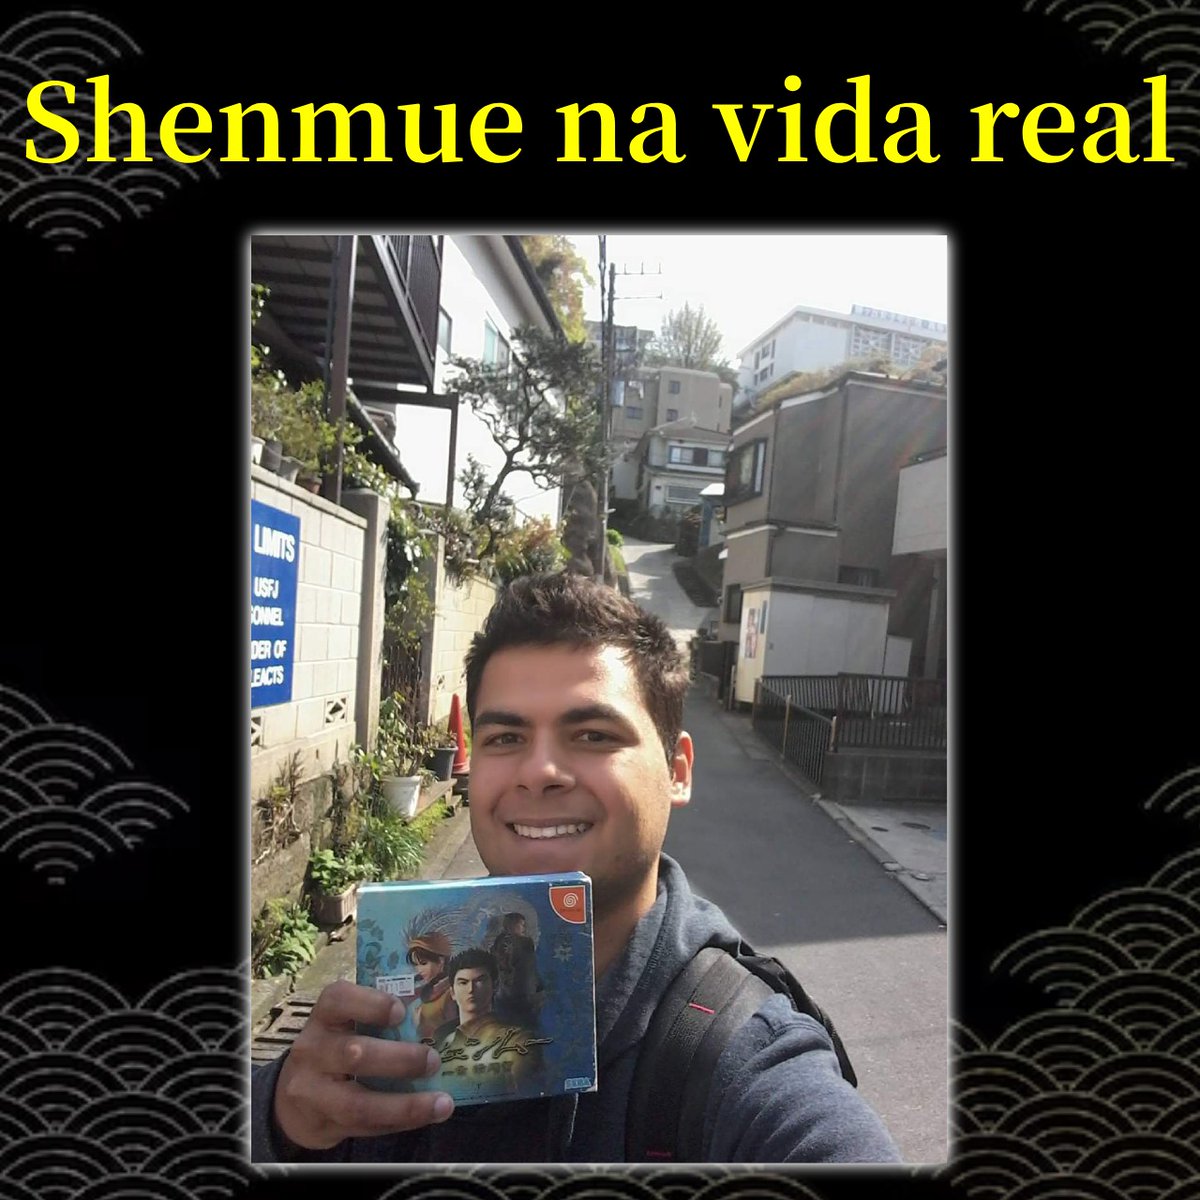 Shenmue na vida real!

youtube.com/shorts/NGhEDL2…

#Shenmue #Shenmue0 #Shenmue3 #ShenmueAnime2 #ShenmueDay #saveshenmue #sega #Dreamcast  #LetsGetShenmue4 #ShenmueAnime2 #Retro #retrogamer #retrogamming #PlayStation #Xbox